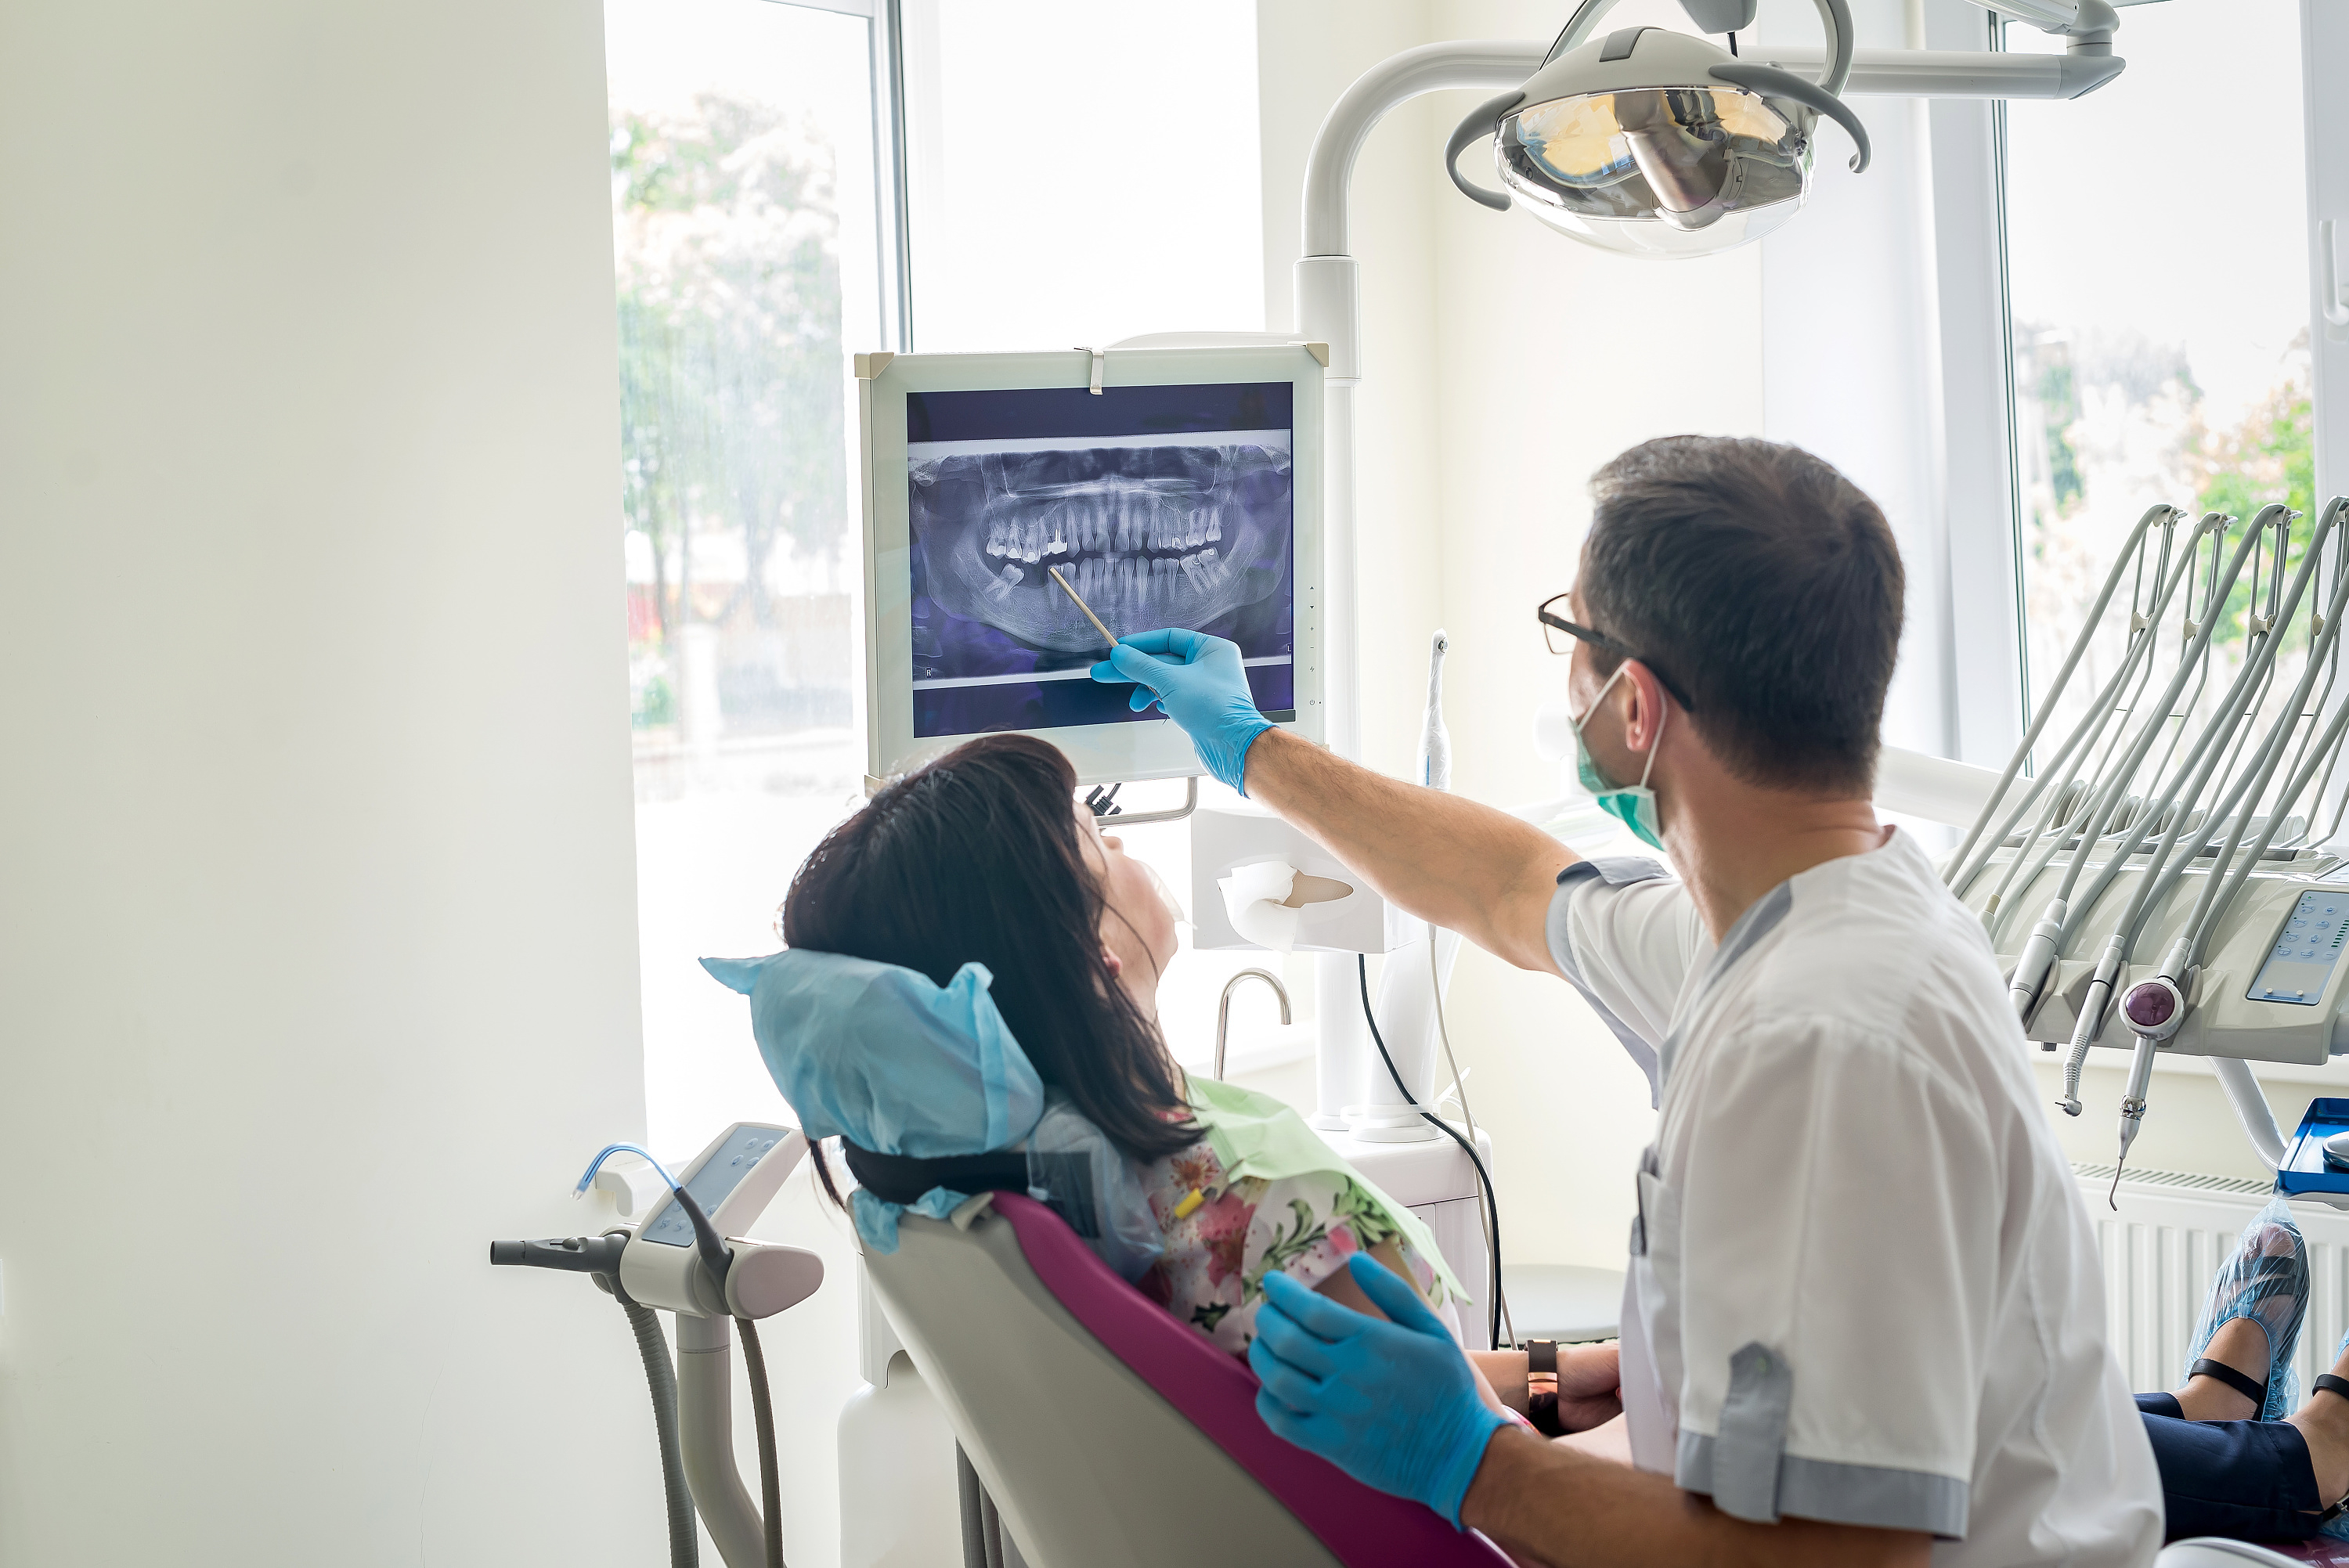 “Fictitious billings”, “disrepair of healthy teeth”… Ten new health centers deregulated